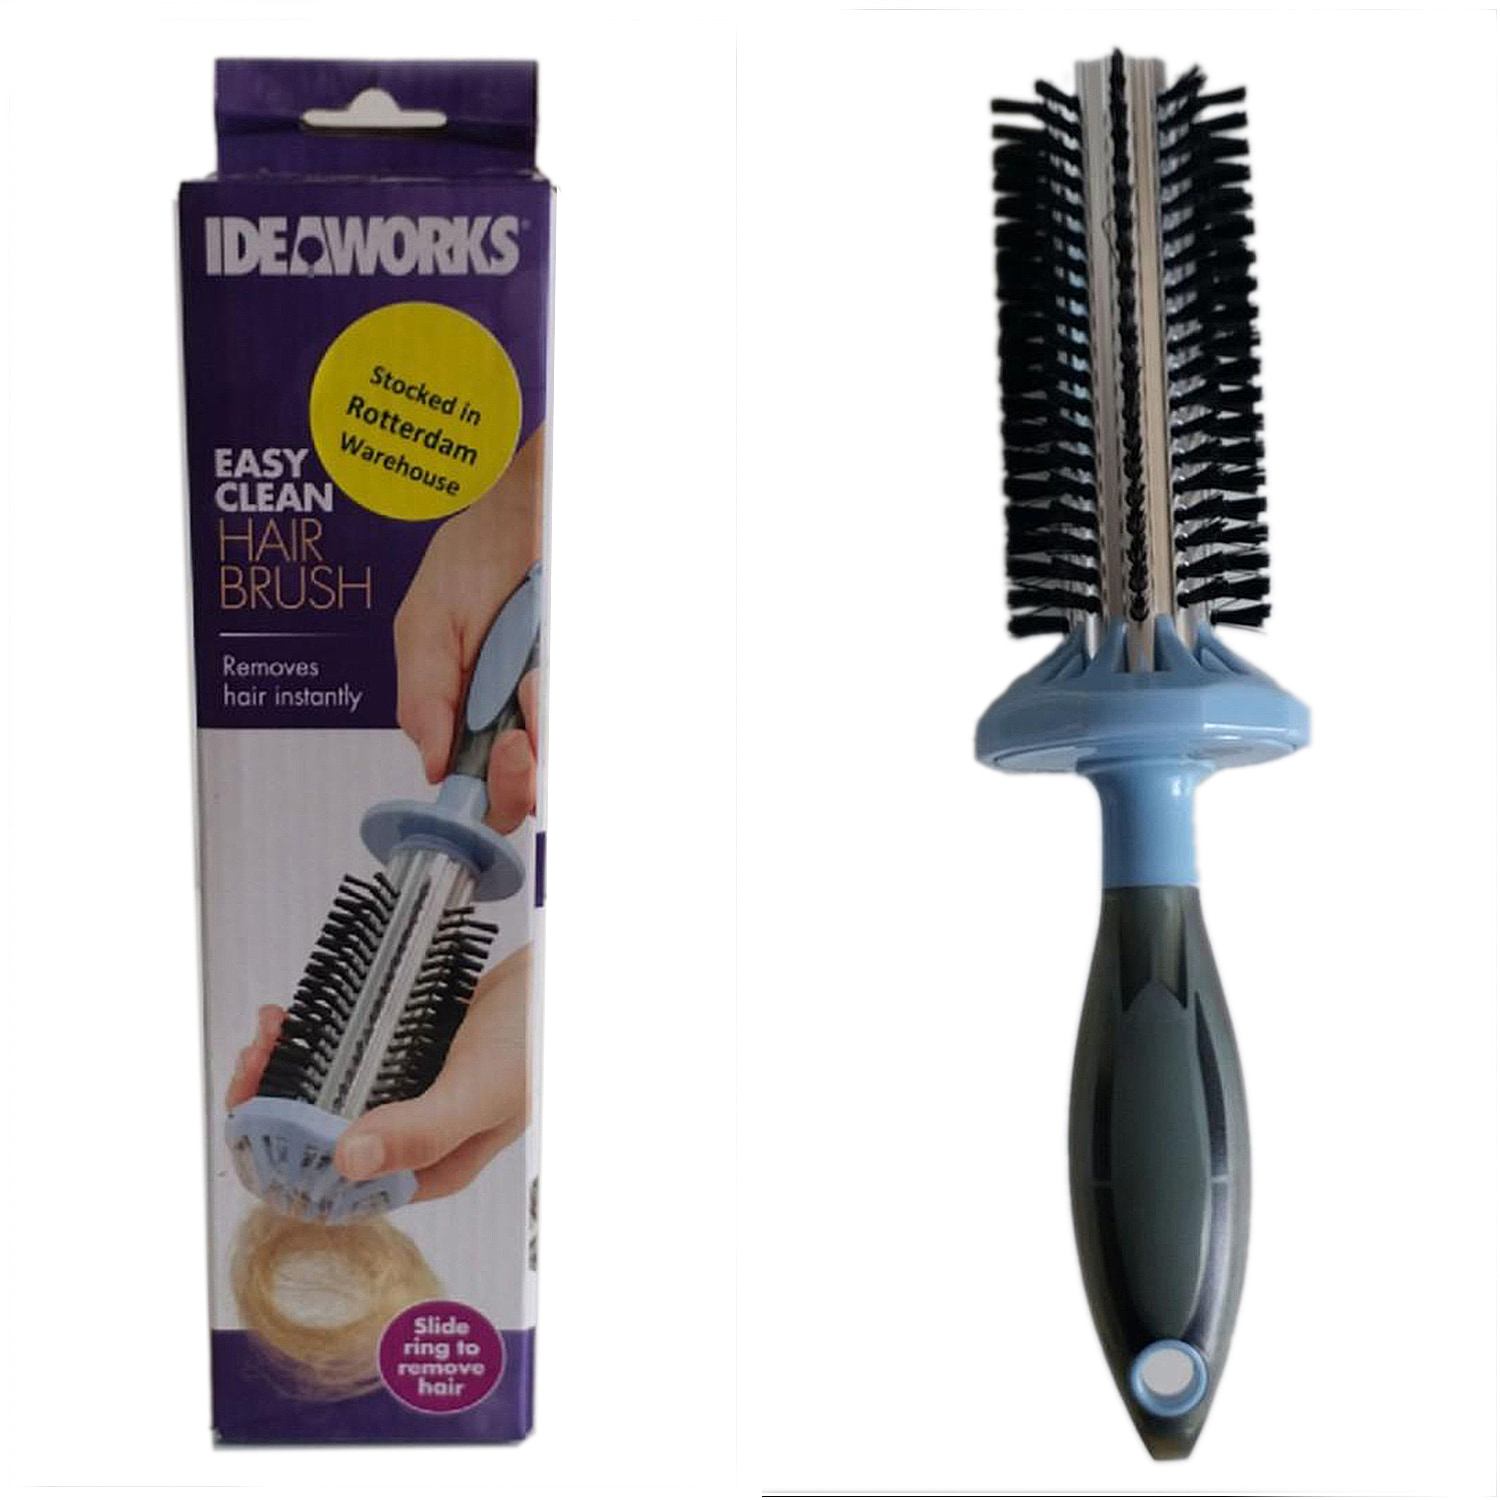 Ideaworks-Easy-Clean-Hair-Brush-with-Built-in-Hair